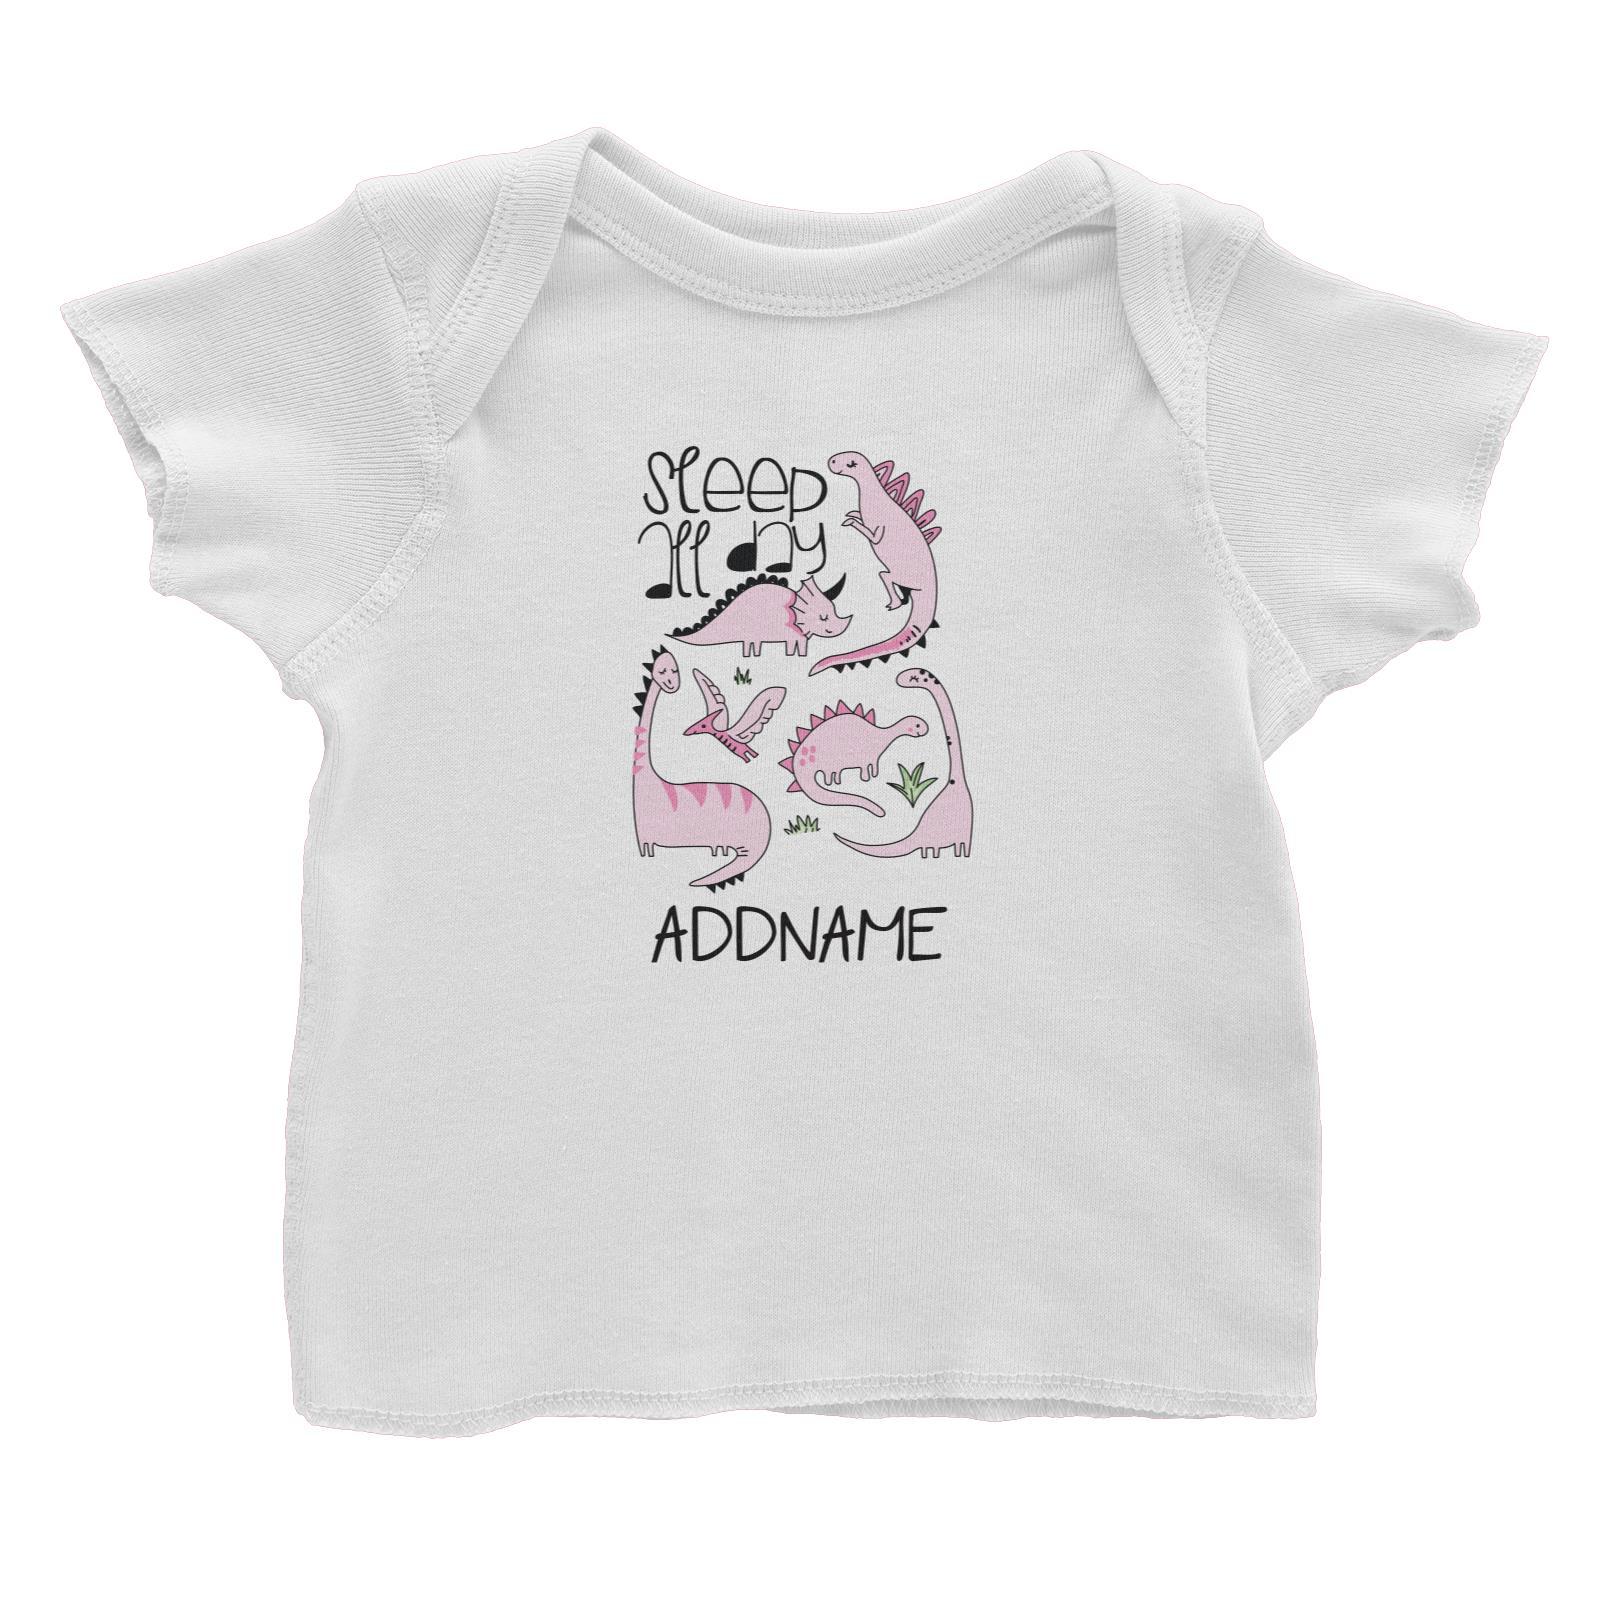 Cool Vibrant Series Sleep All Day Dinosaur Addname Baby T-Shirt